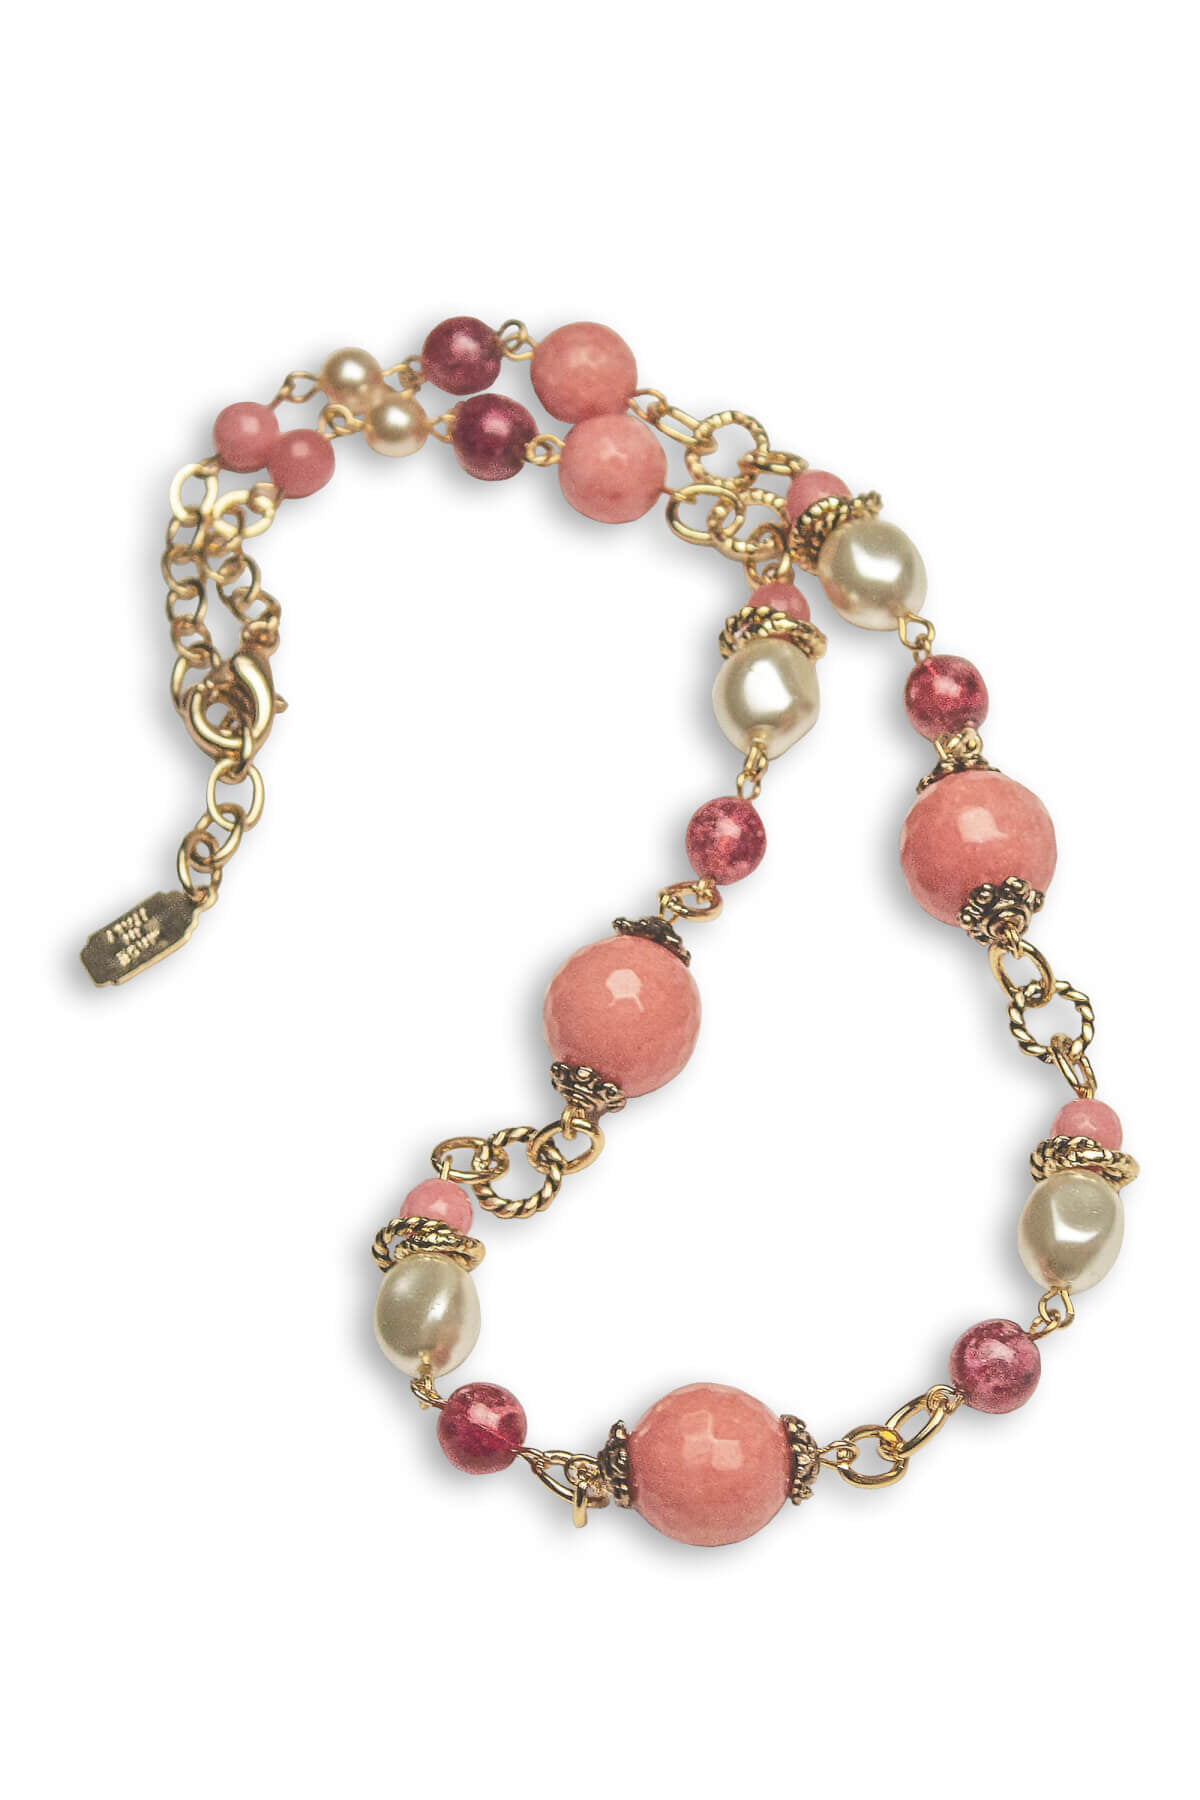 venetian glass beads